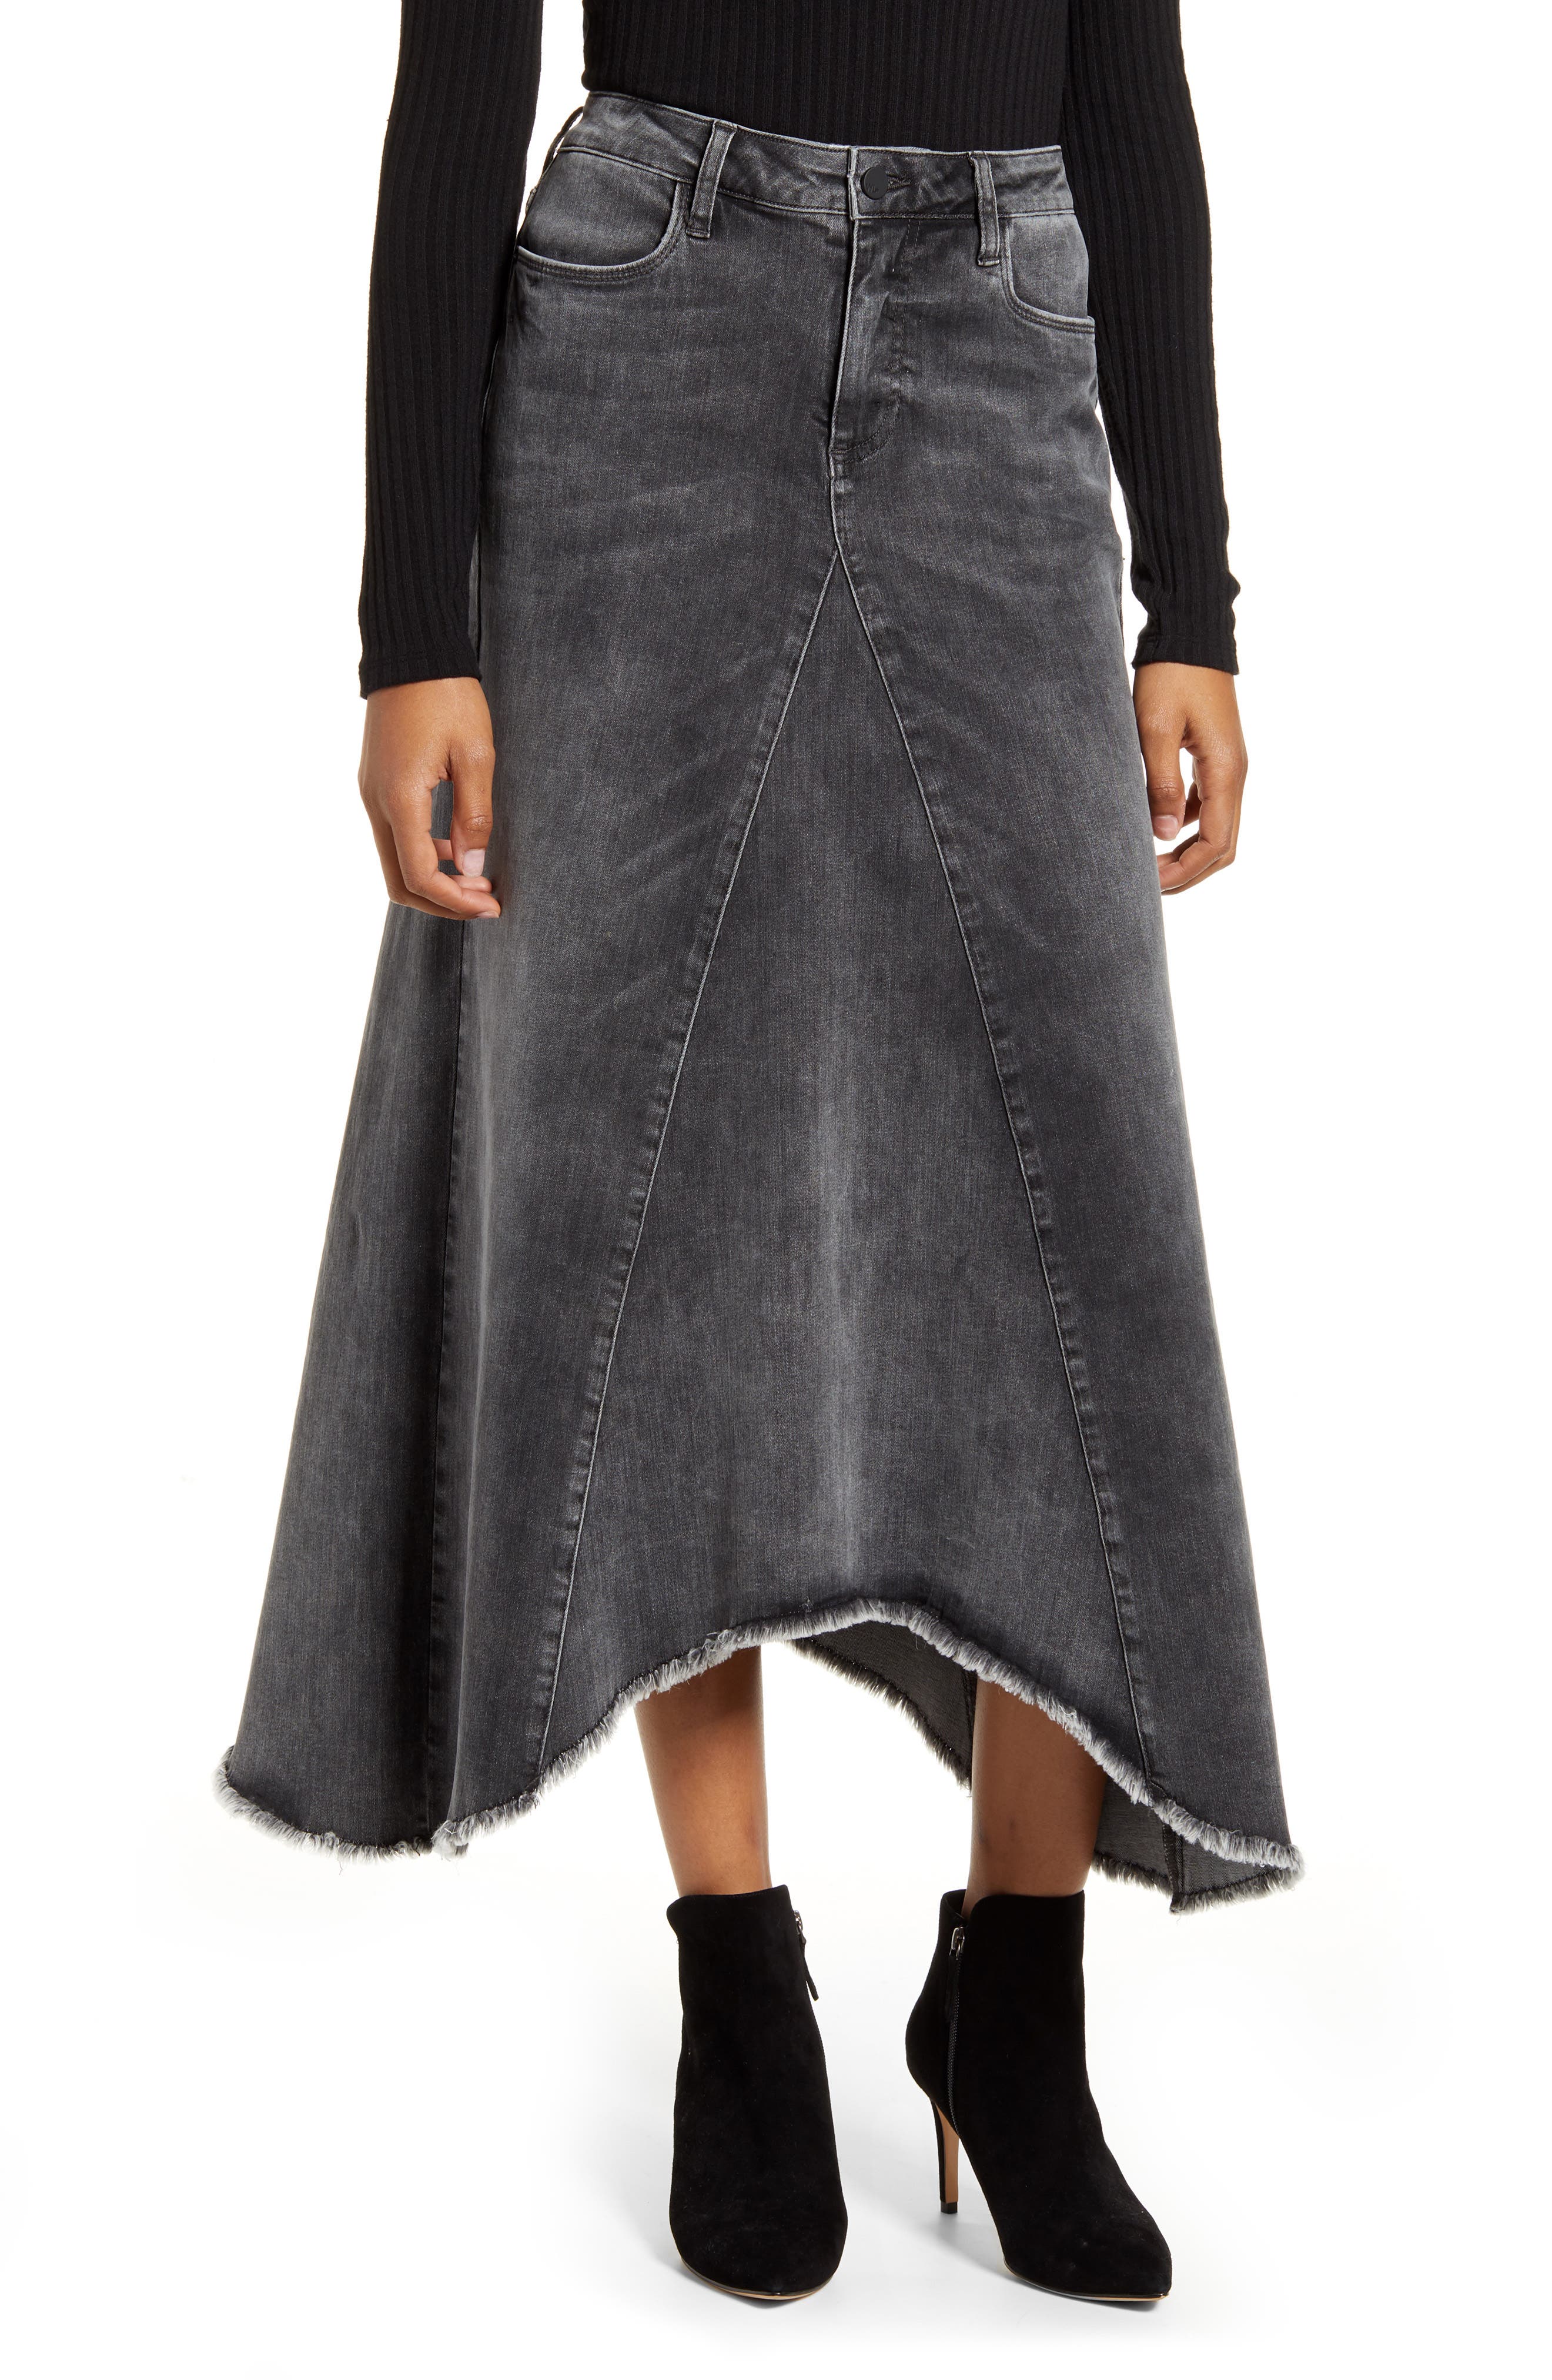 Wash Lab Denim Long Denim Skirt in Grey at Nordstrom